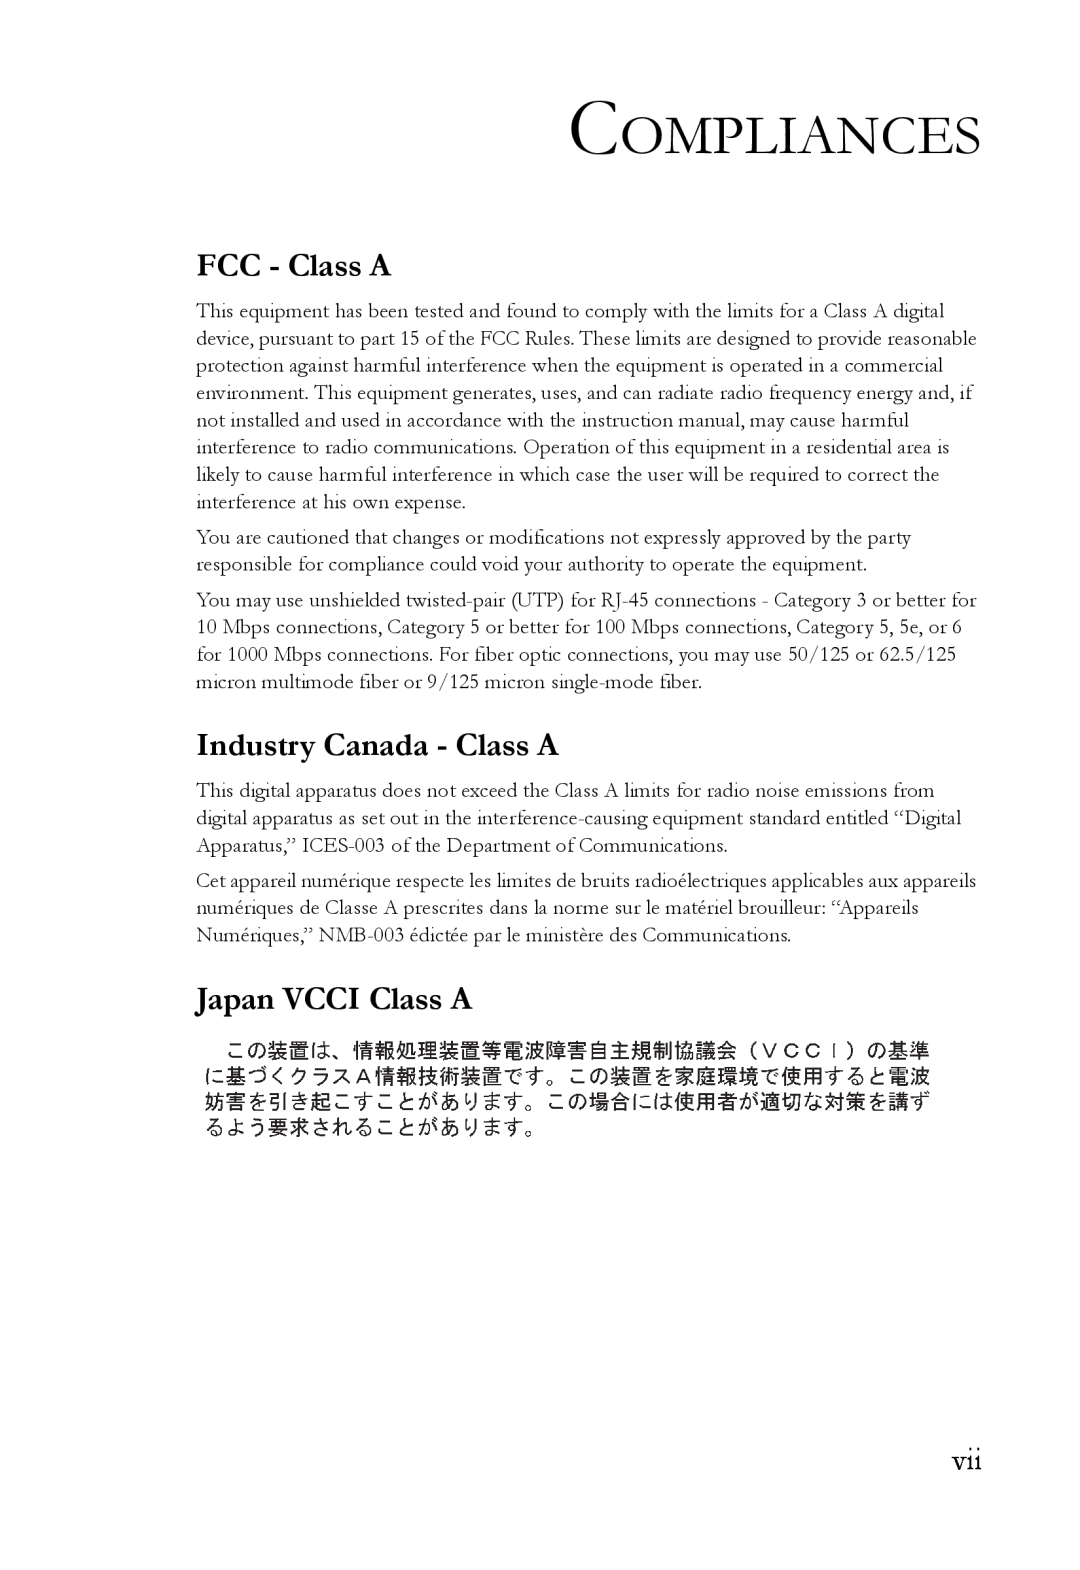 SMC Networks SMC7824M/FSW manual Compliances, FCC - Class A, Industry Canada - Class A, Japan VCCI Class A 